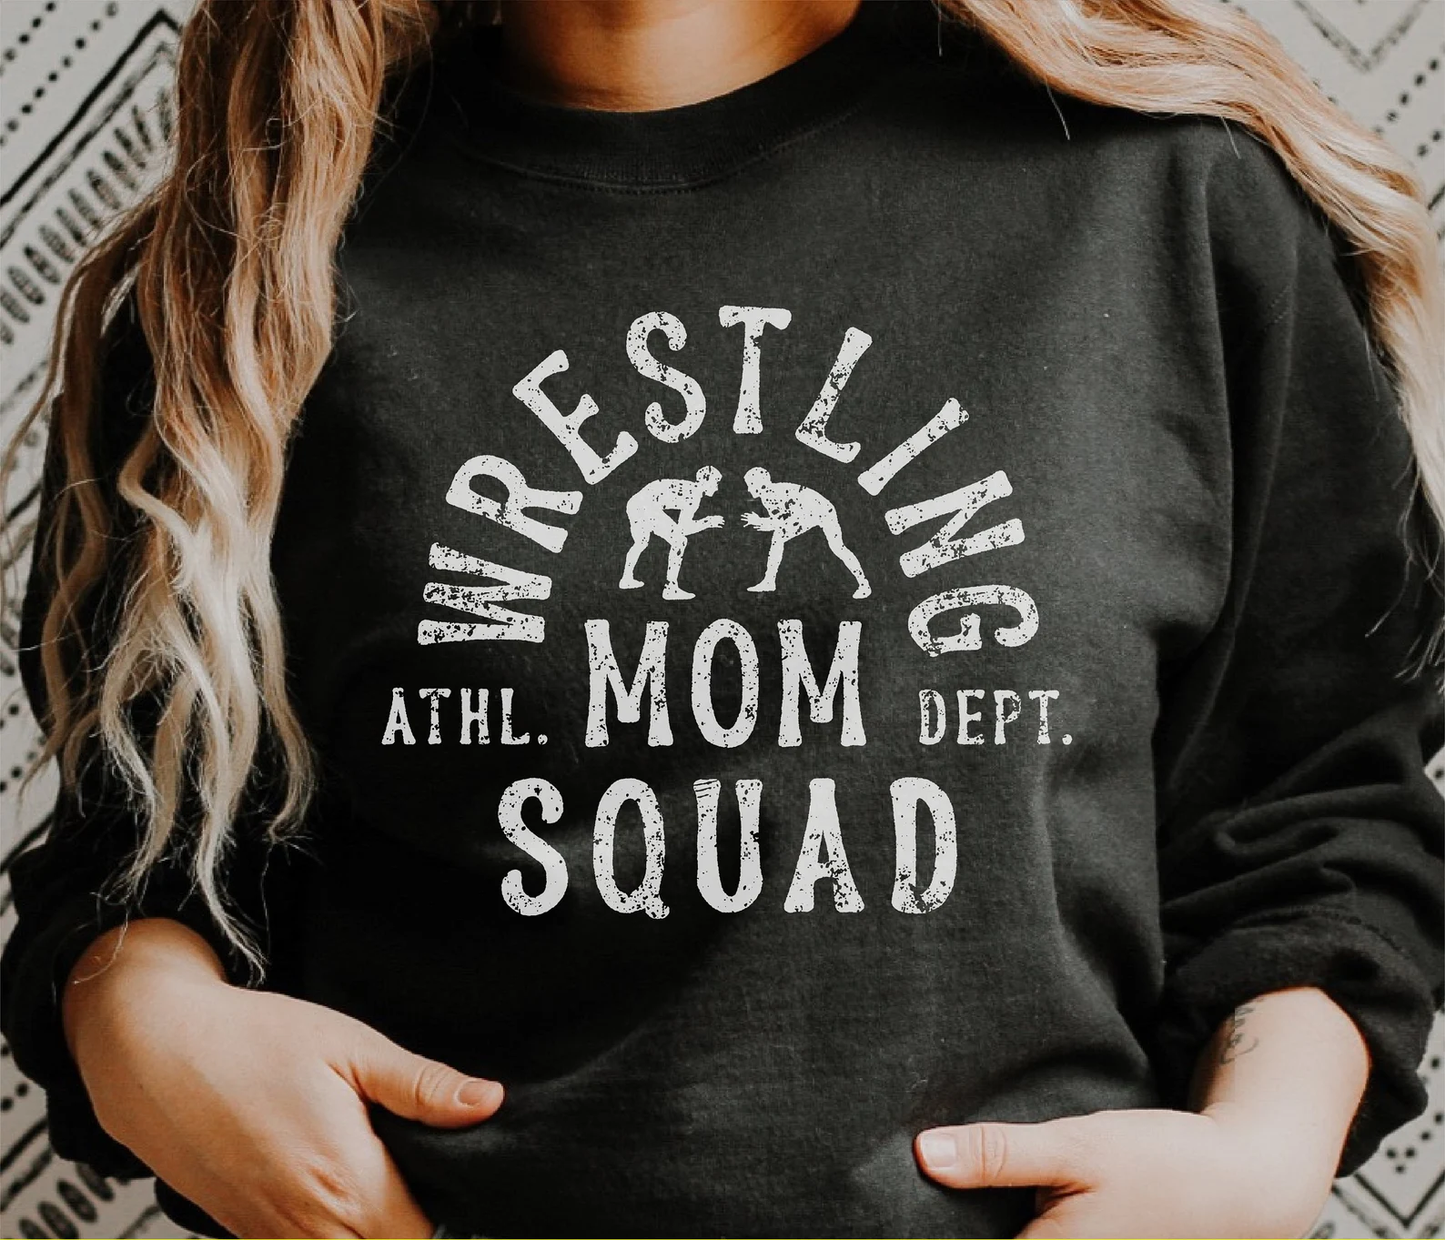 Wrestling Mom Squad